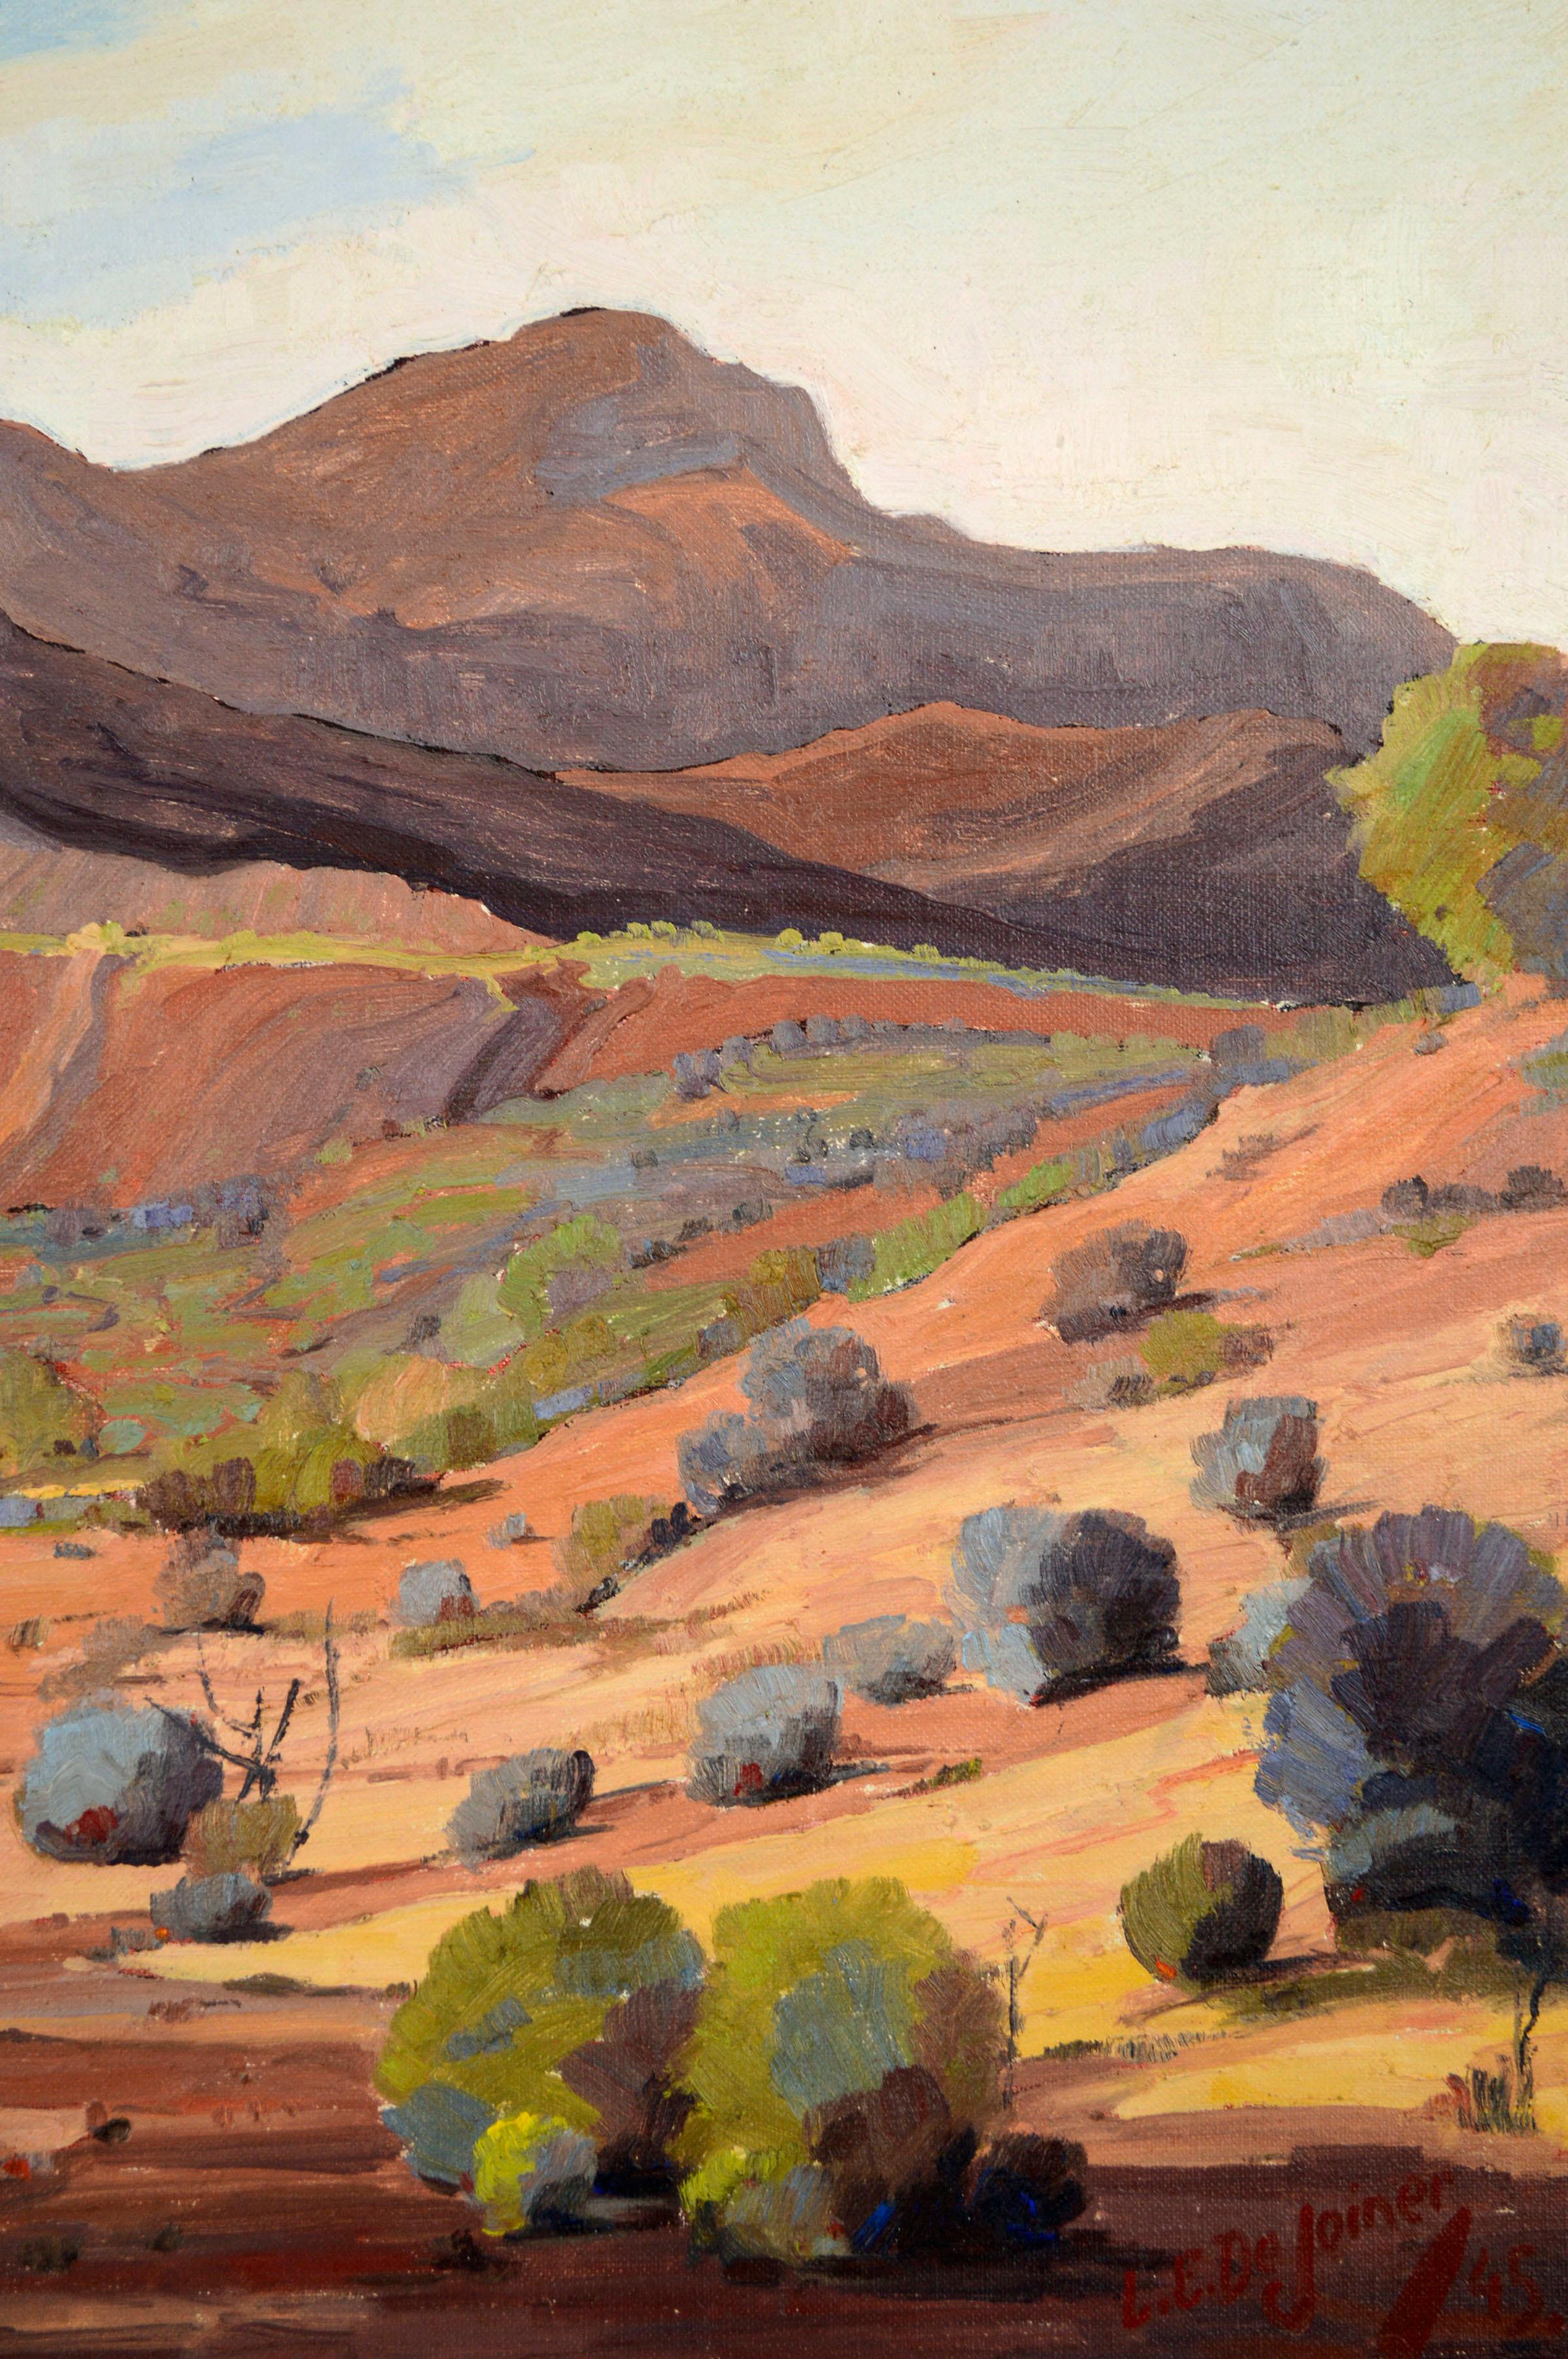 Picacho Peak, Arizona 1945 - Mid Century Southwest Desert Landscape by Dejoiner - American Impressionist Painting by Luther Evans Dejoiner